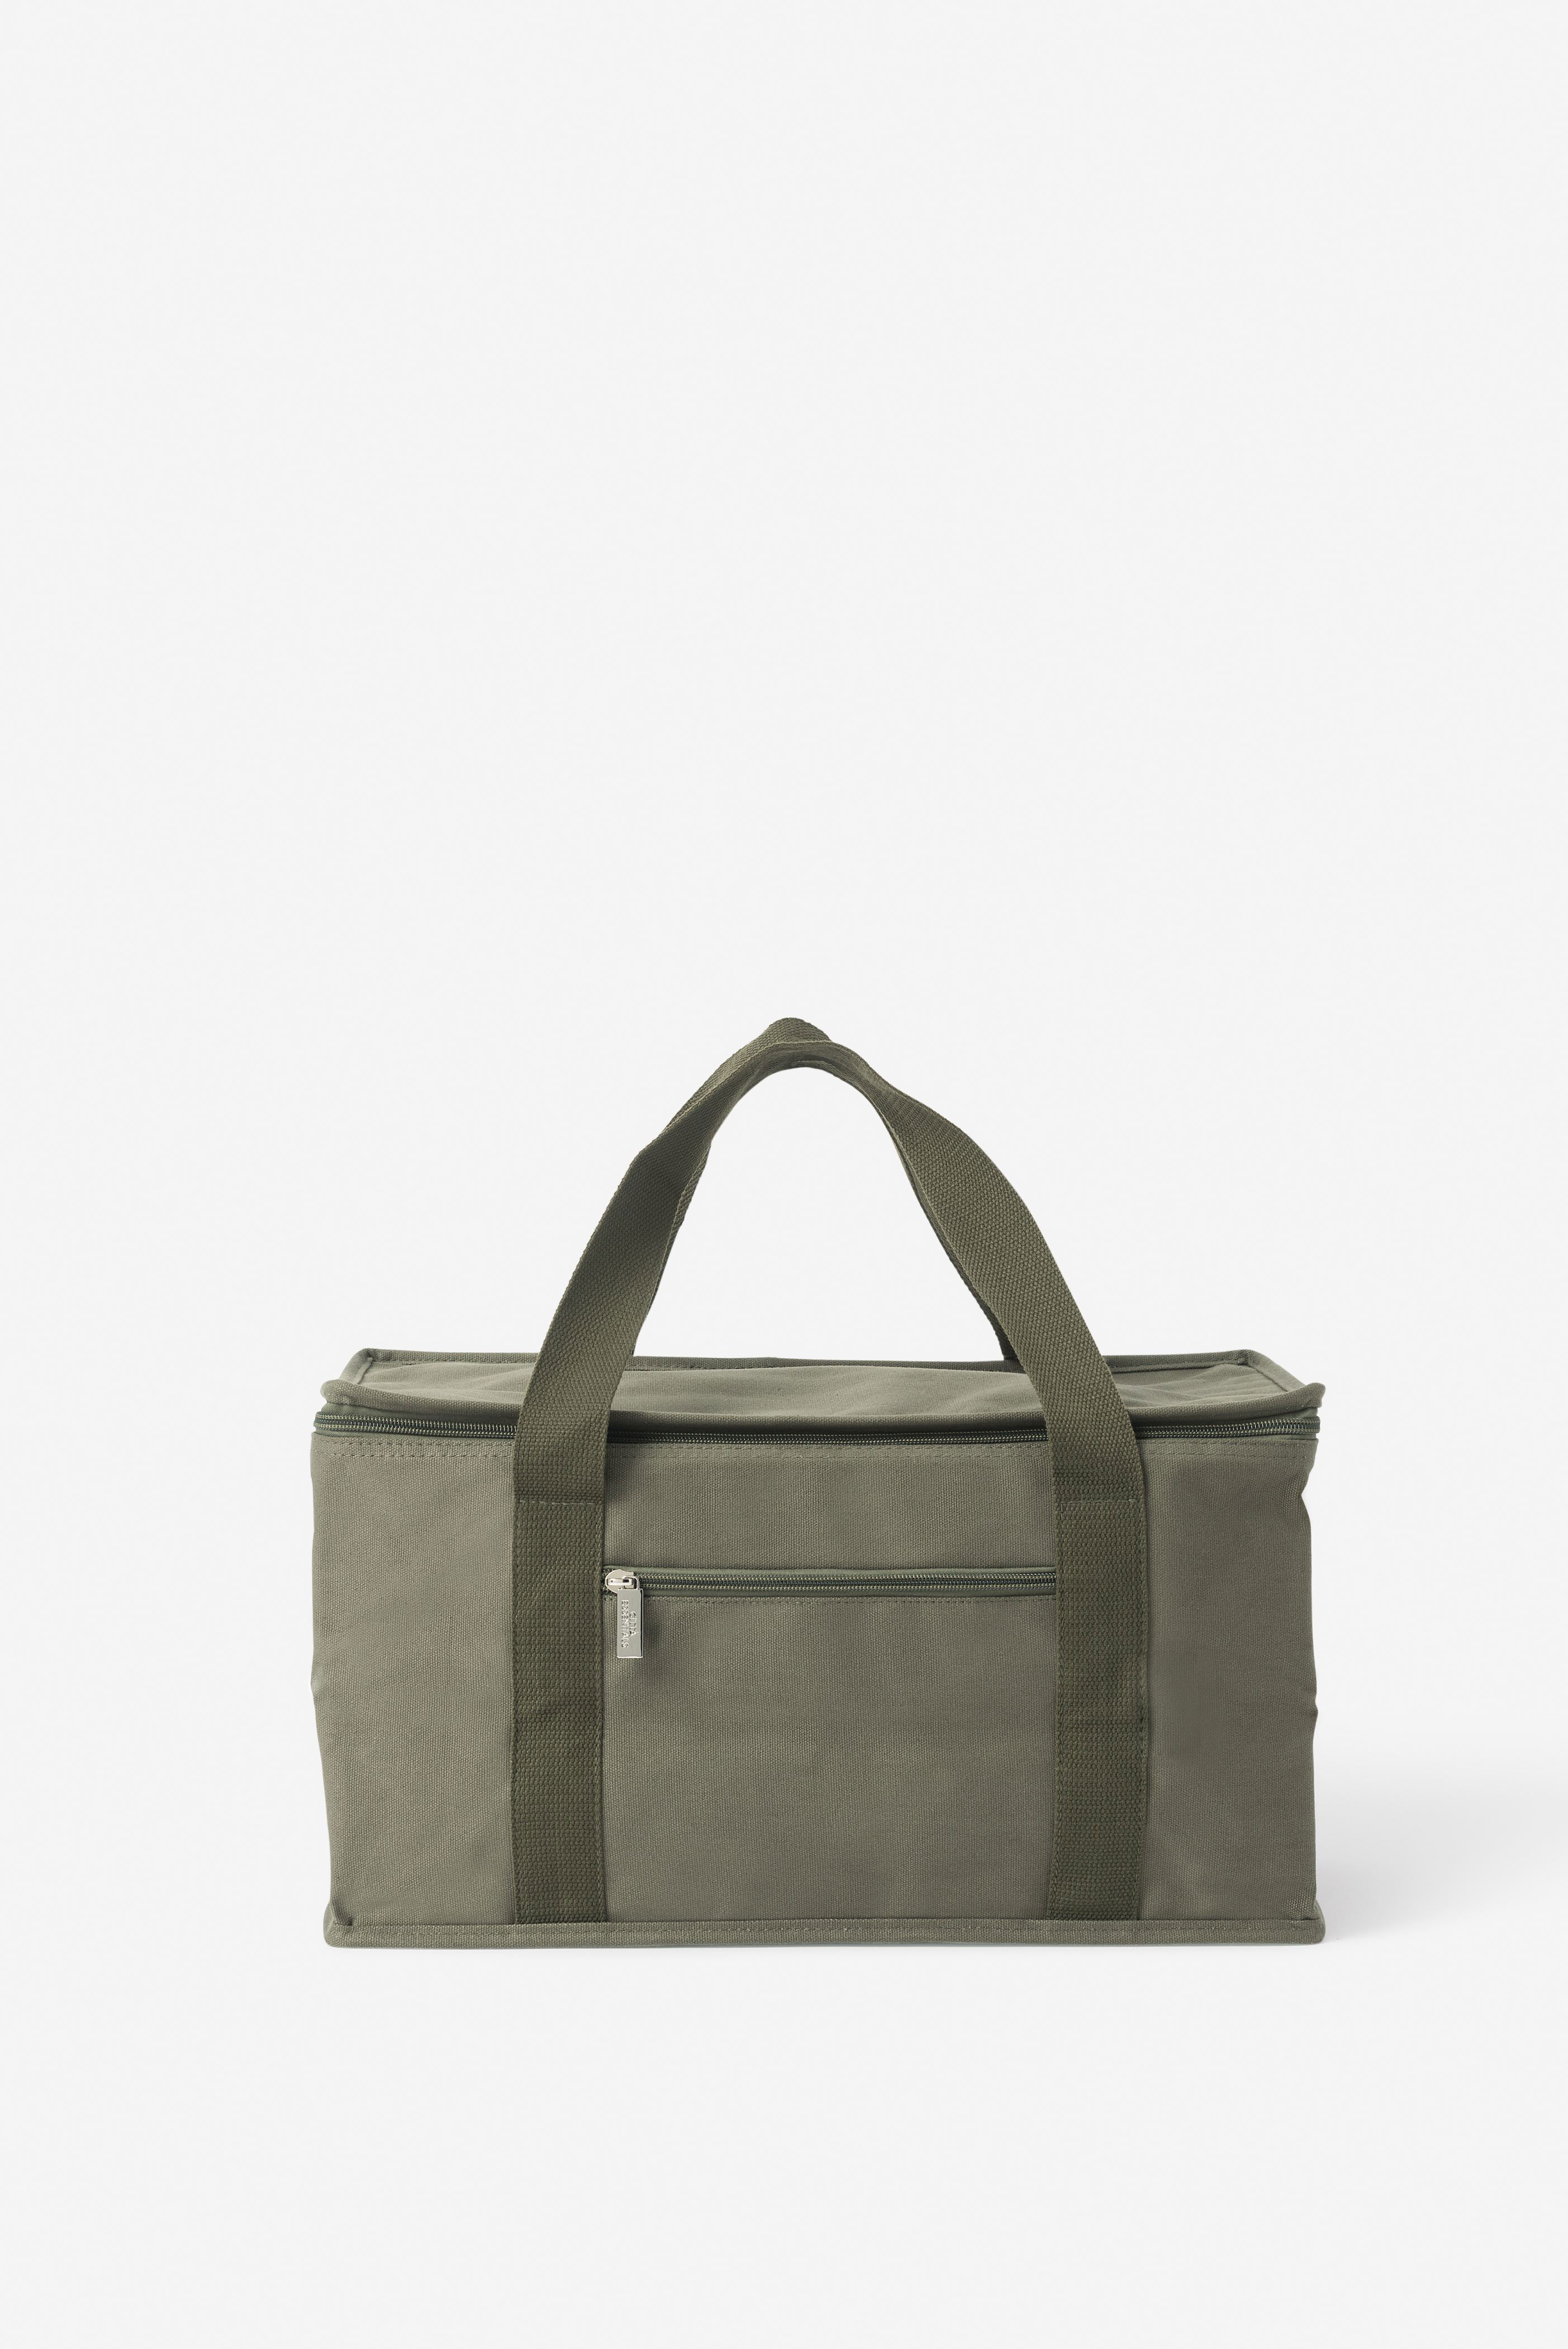 xinblueCo Geometry Weekender Bag For Women Canvas Duffle